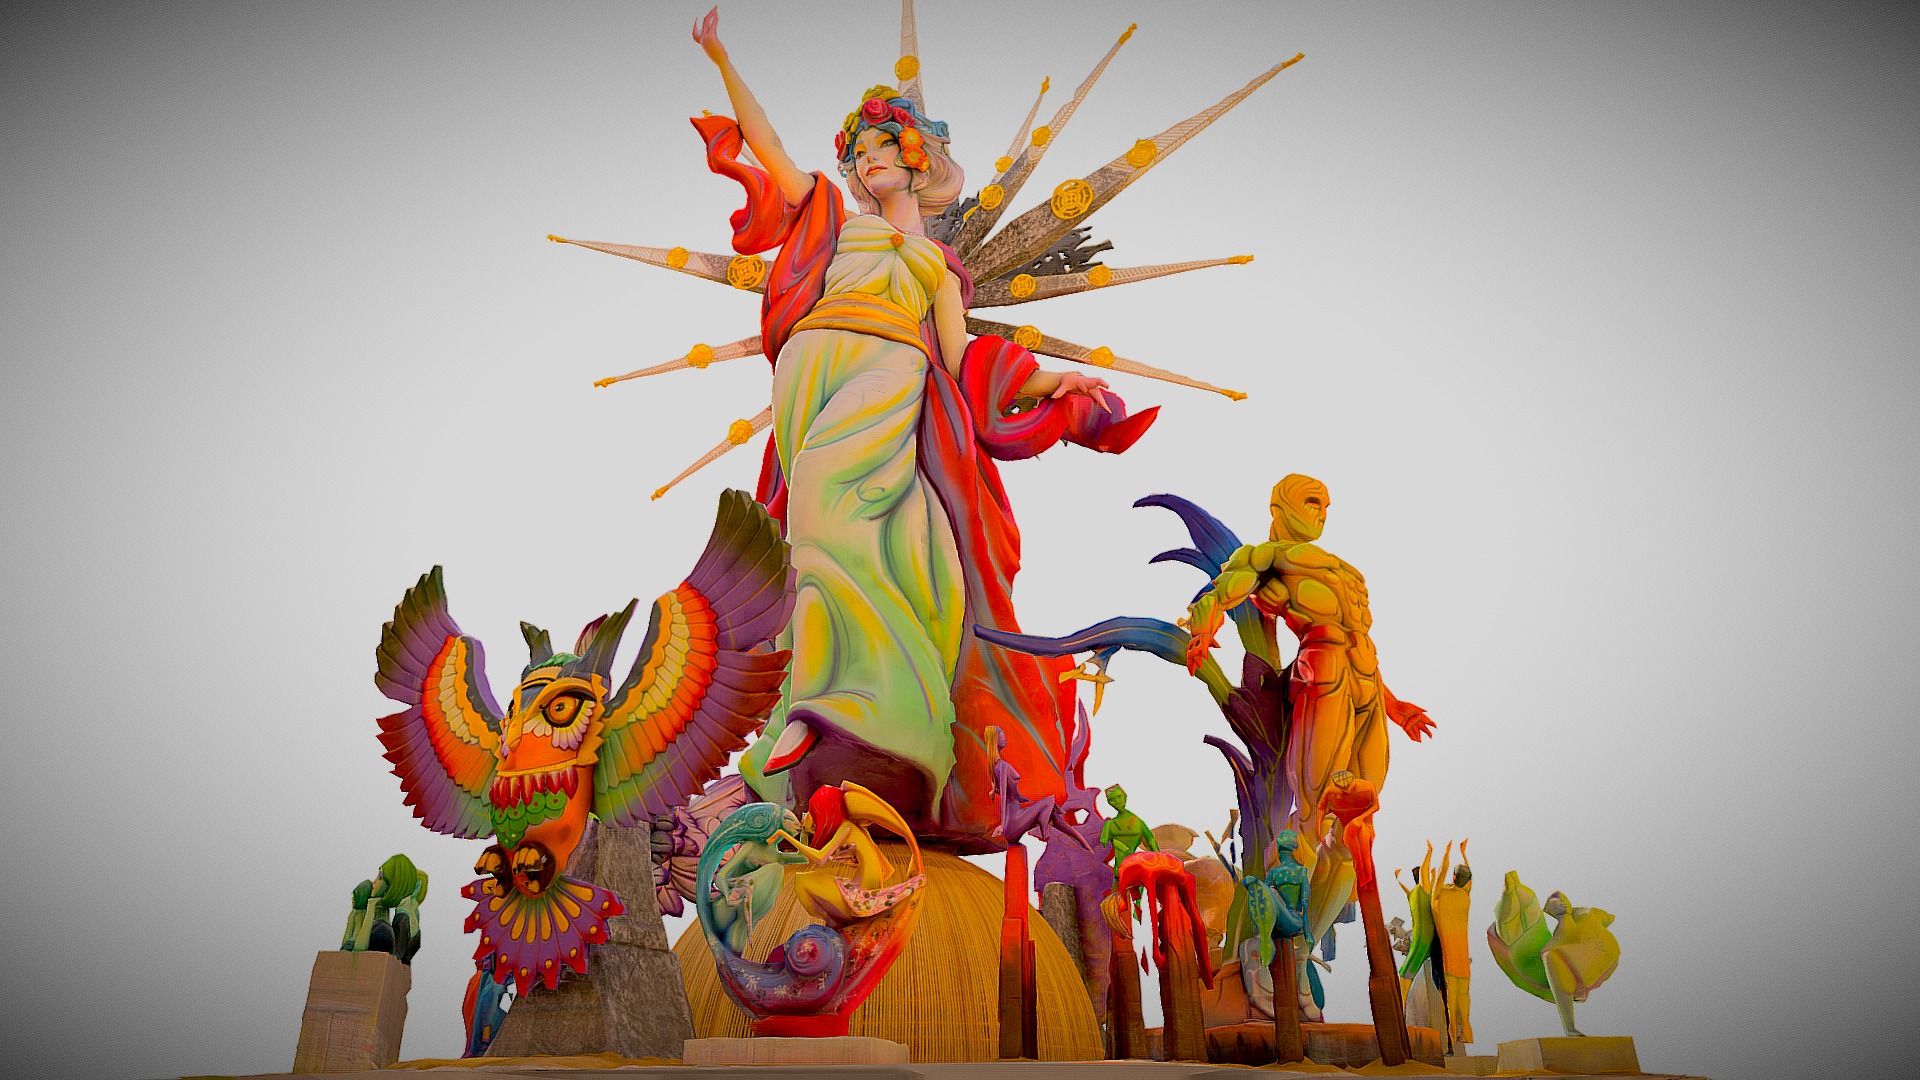 3D model Hoguera / Foguera Oficial de Alicante 2019 (3D) - This is a 3D model of the Hoguera / Foguera Oficial de Alicante 2019 (3D). The 3D model is about a statue of a person with a crown and a colorful dress.